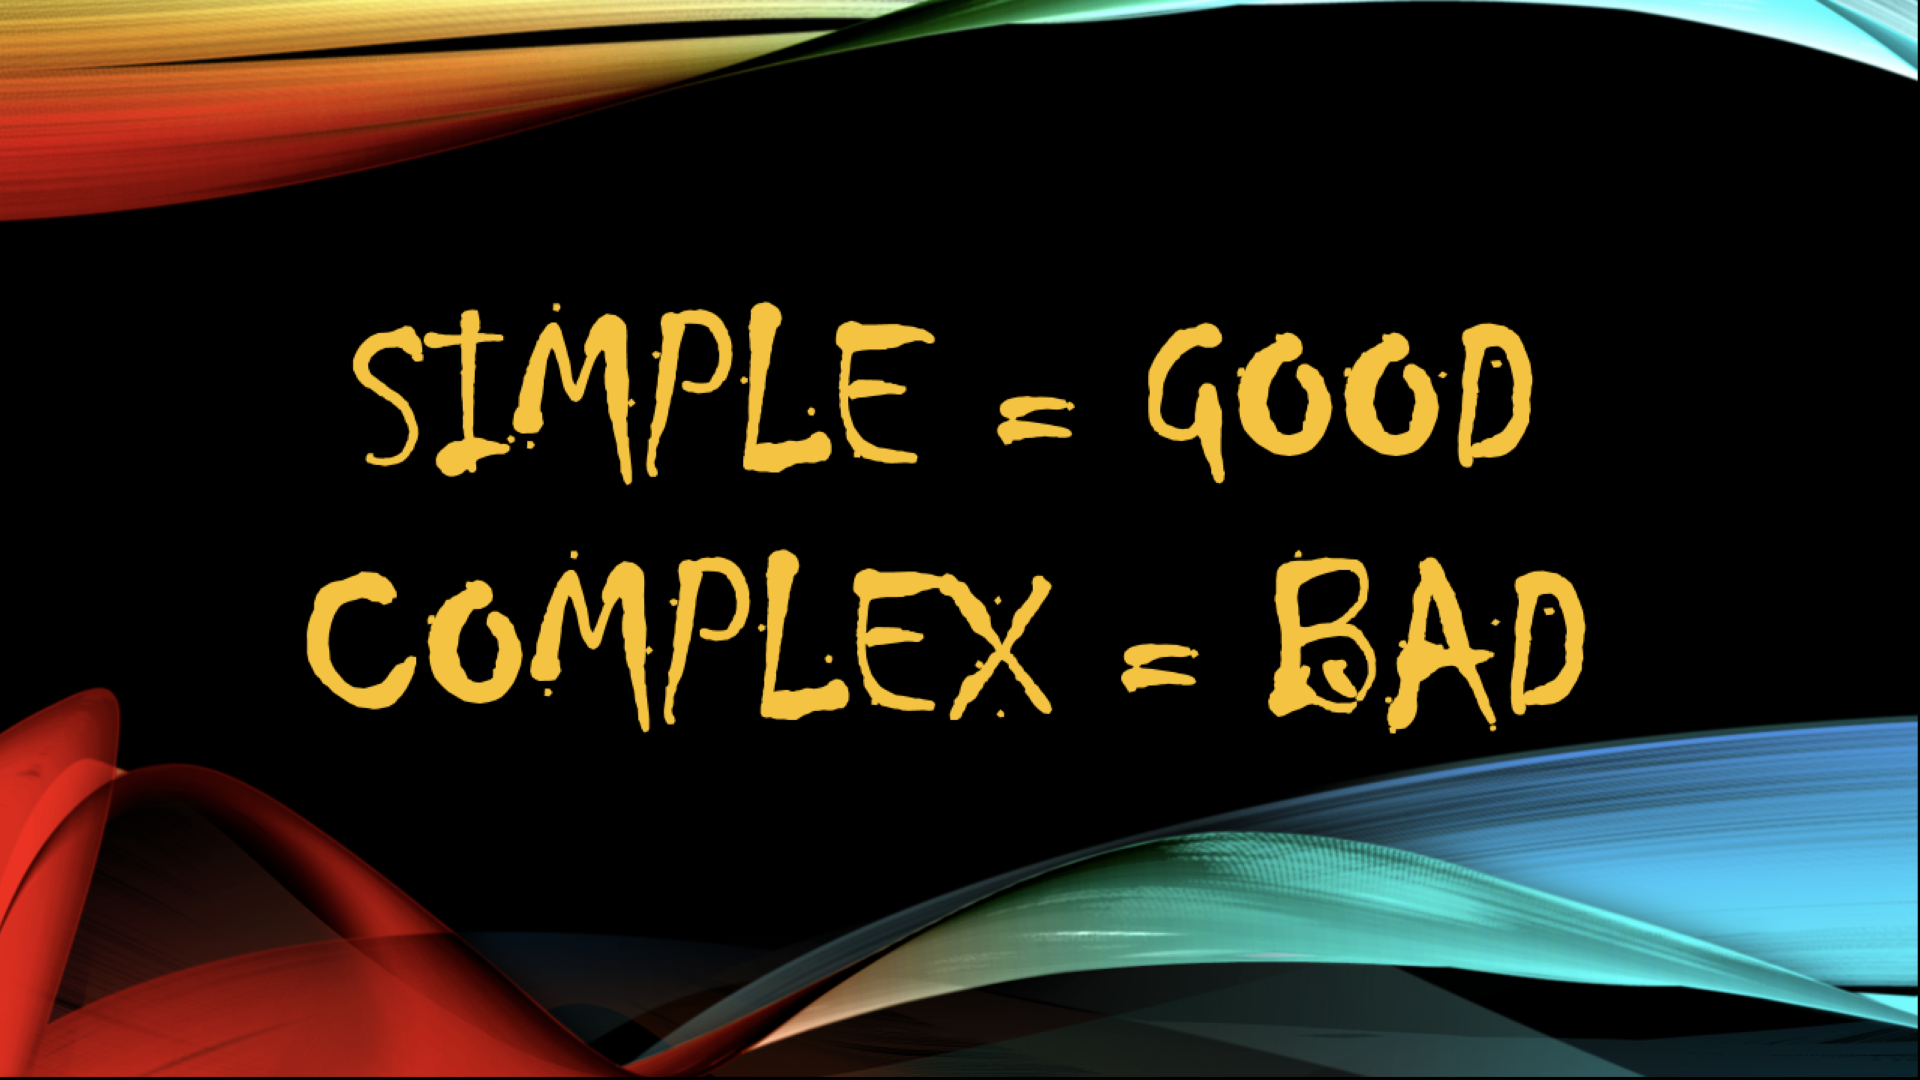 Simple = Good. Complex = Bad